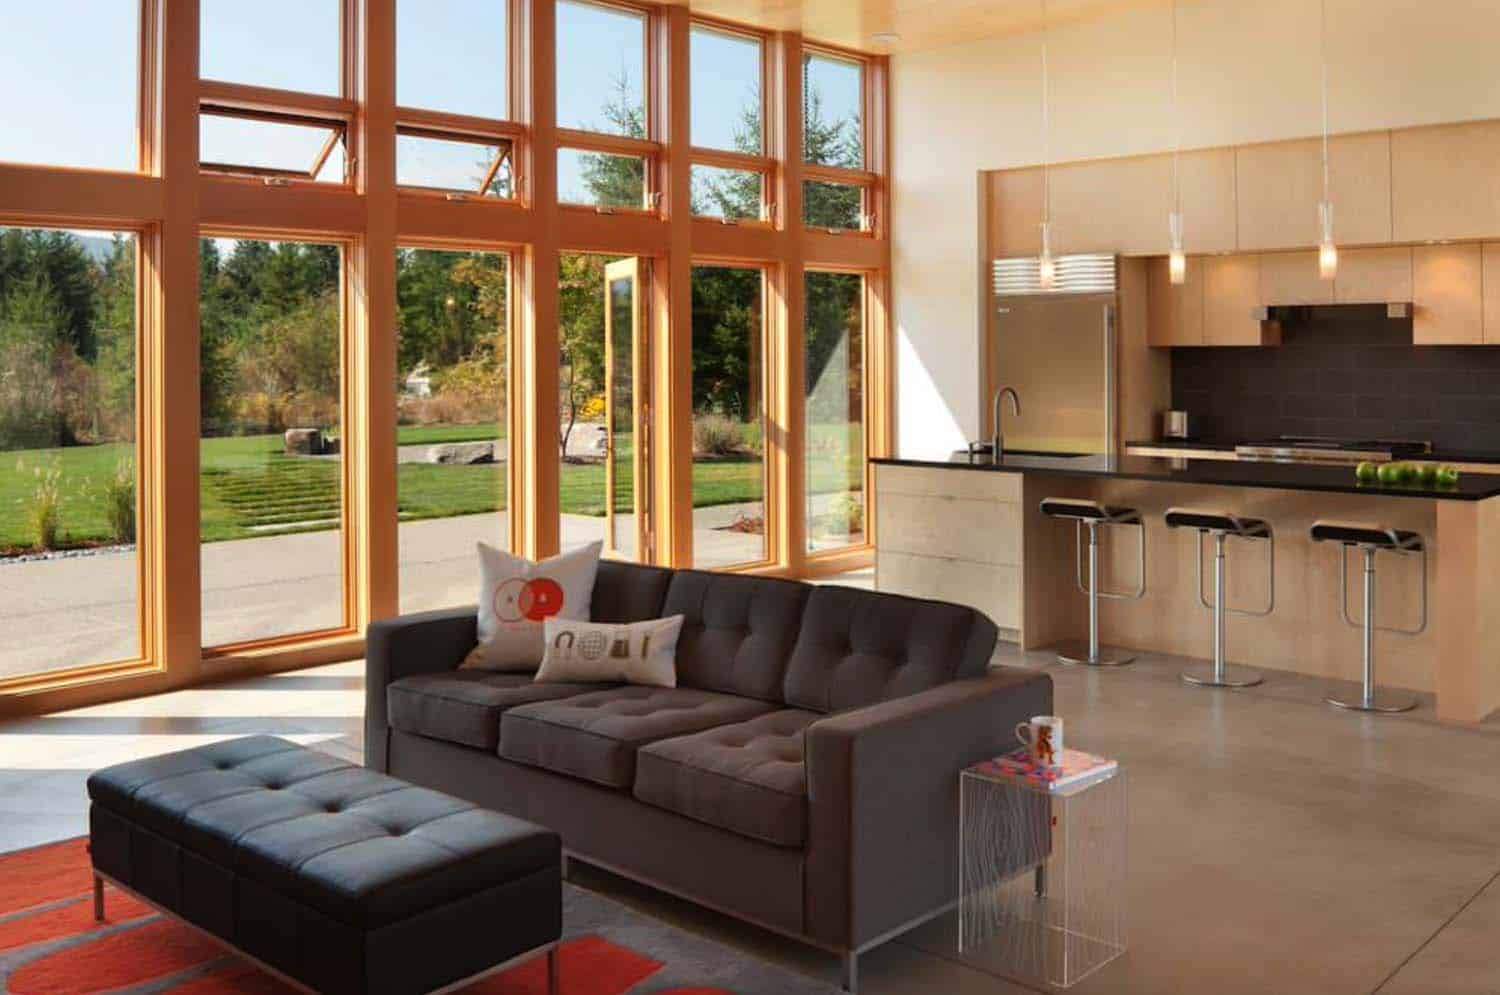 Livable Modern Home-Coates Design Architects-17-1 Kindesign